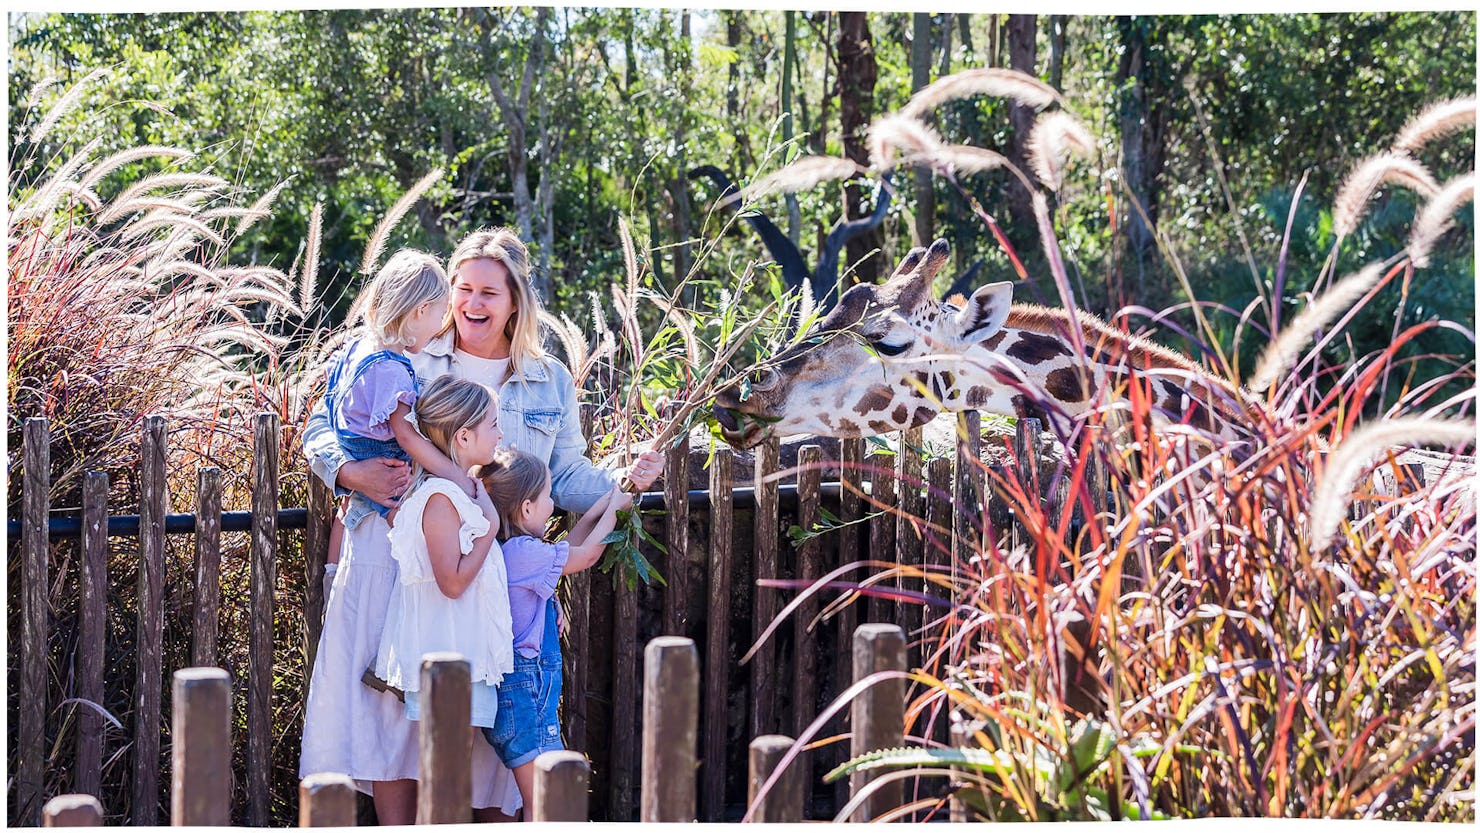 Australia Zoo giraffe feeding